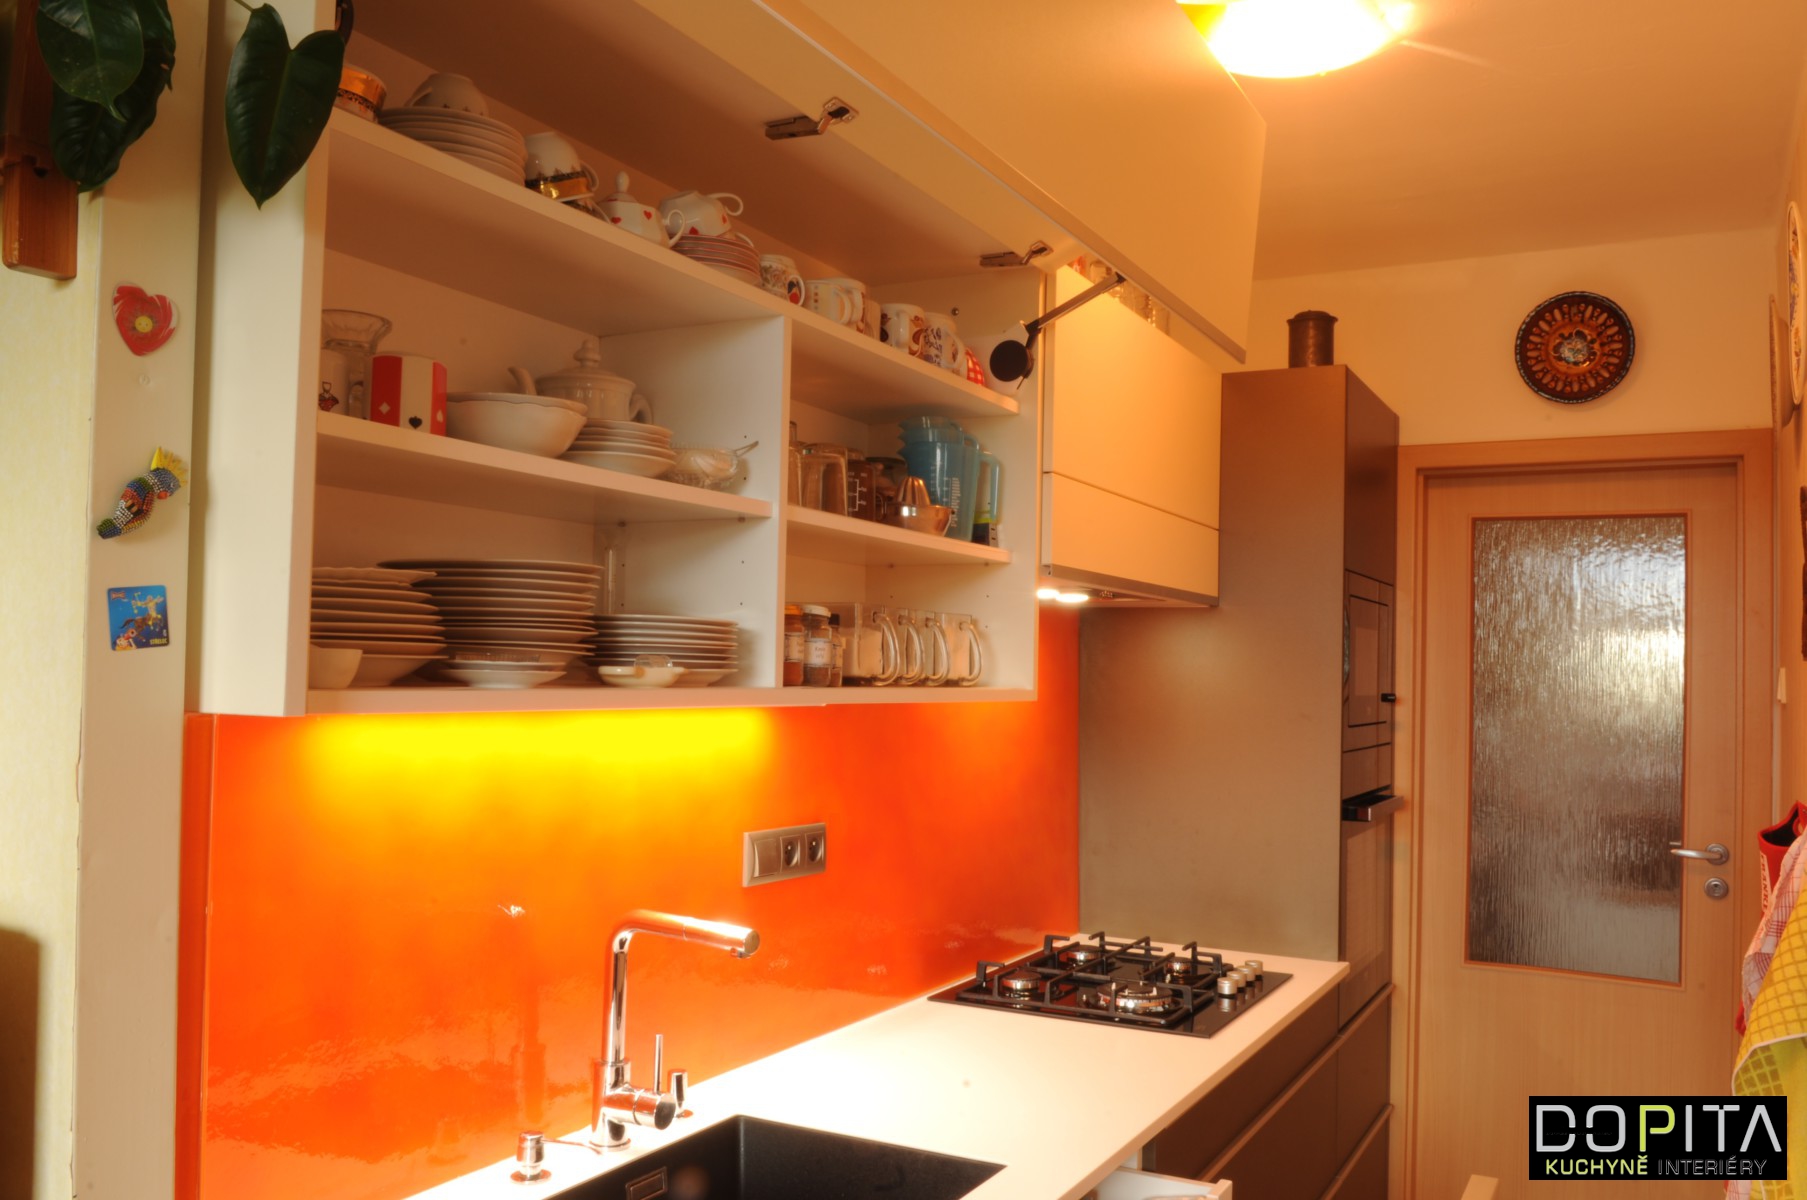 3.-kuchyn-panelak.jpg - DOPITA studio, s.r.o.